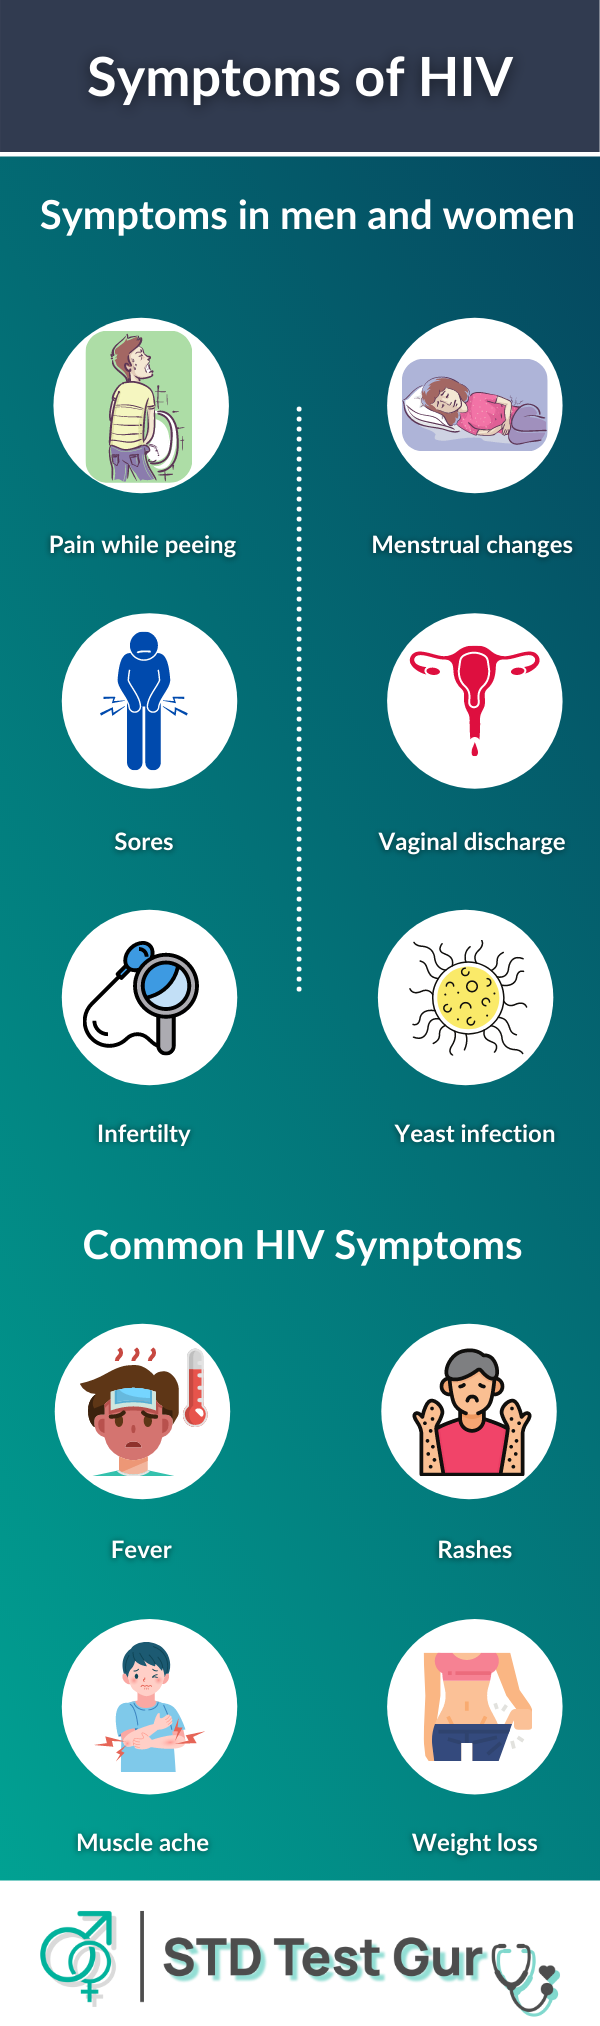 Symptoms of HIV in Men and Women - STDTestGuru